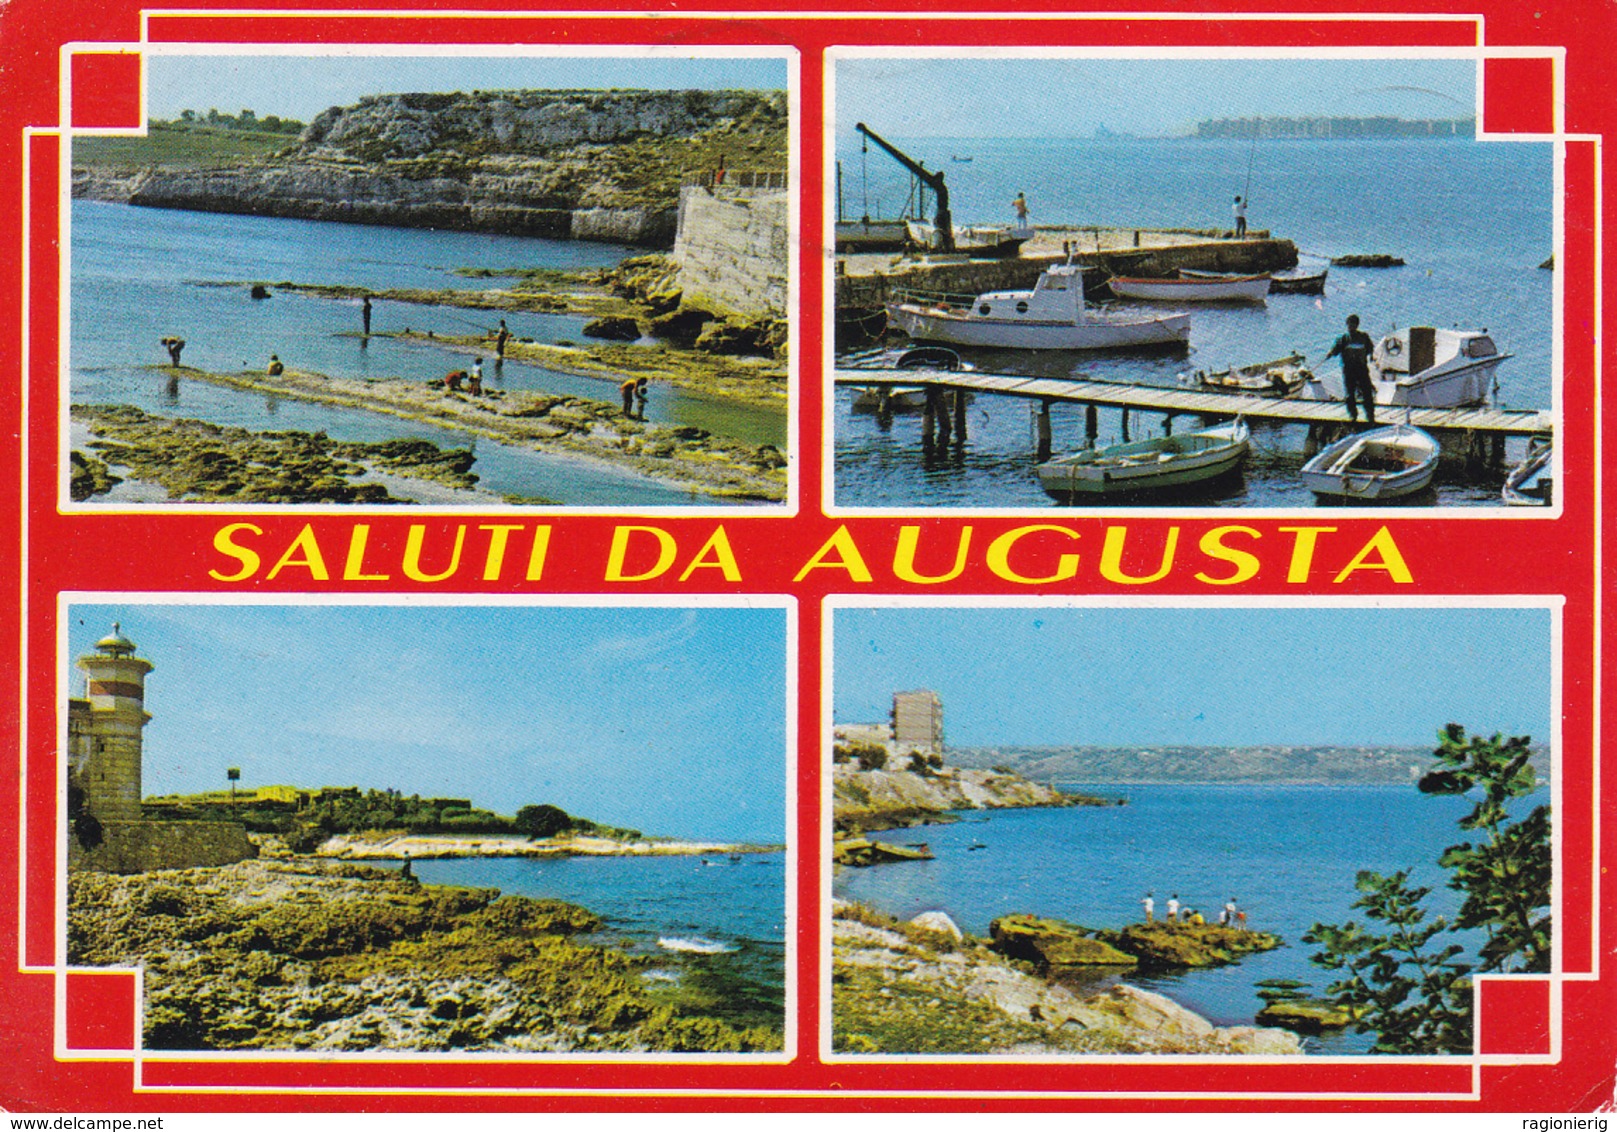 SIRACUSA - Saluti Da Augusta - 4 Vedute - Faro / Phare / Lighthouse / Leuctthurm - 1989 - Siracusa